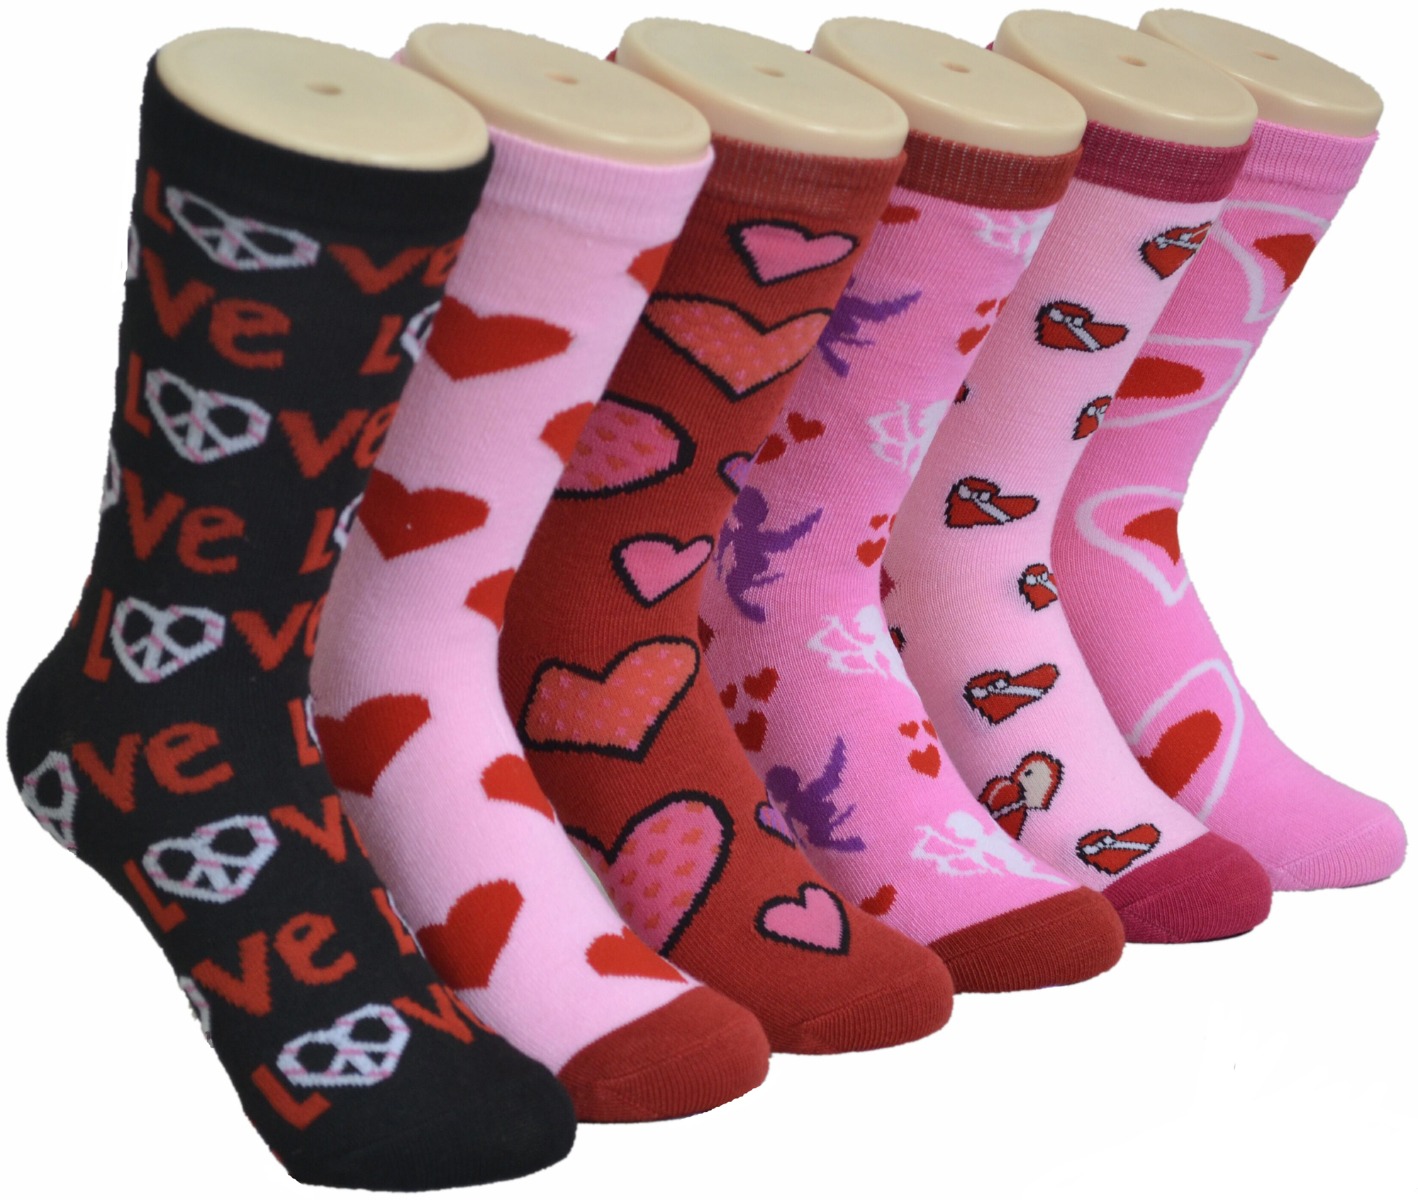 VALENTINE's Day Crew Socks - Heart Print - Size 9-11